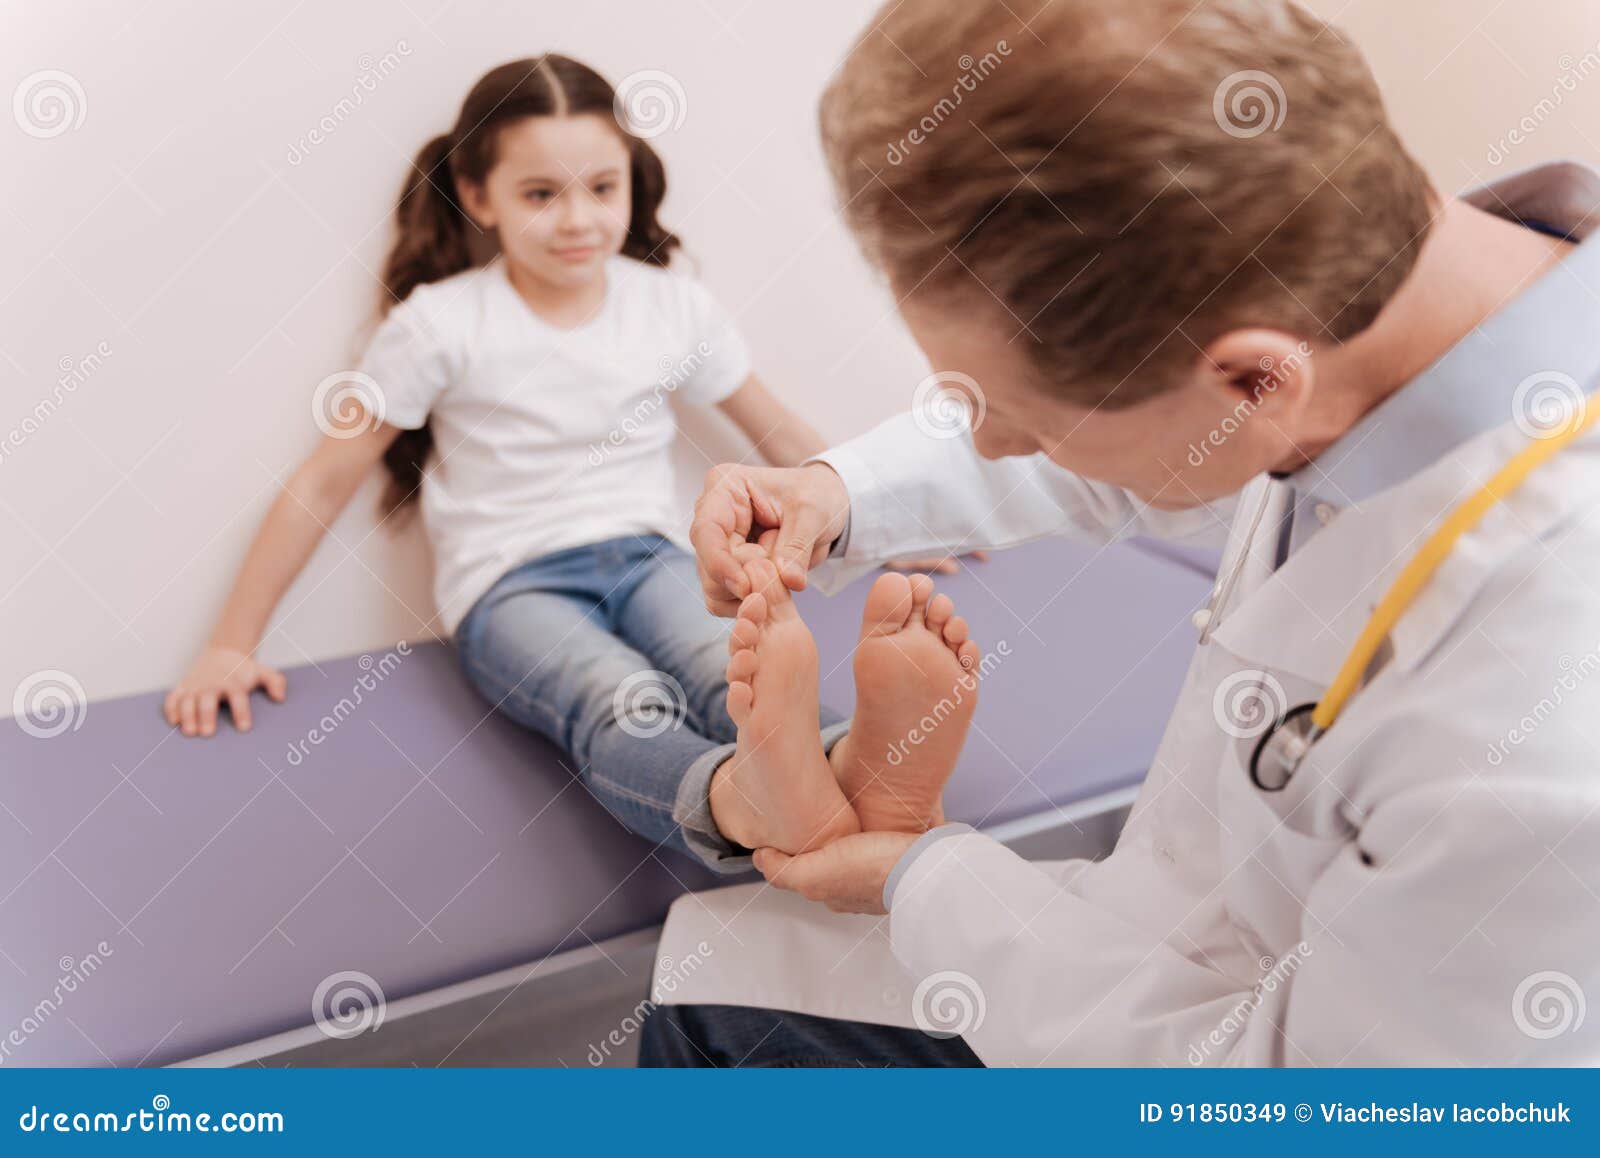 Methodical Scrupulous Doctor Examining Girls Toes Stock Image Image